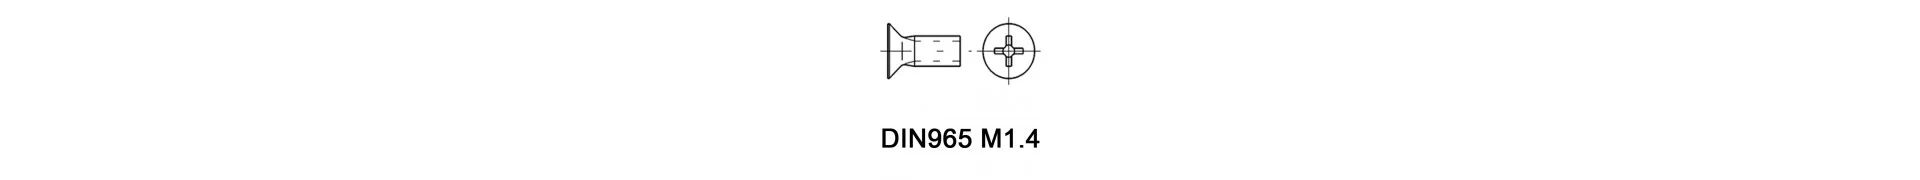 DIN965 M1.4